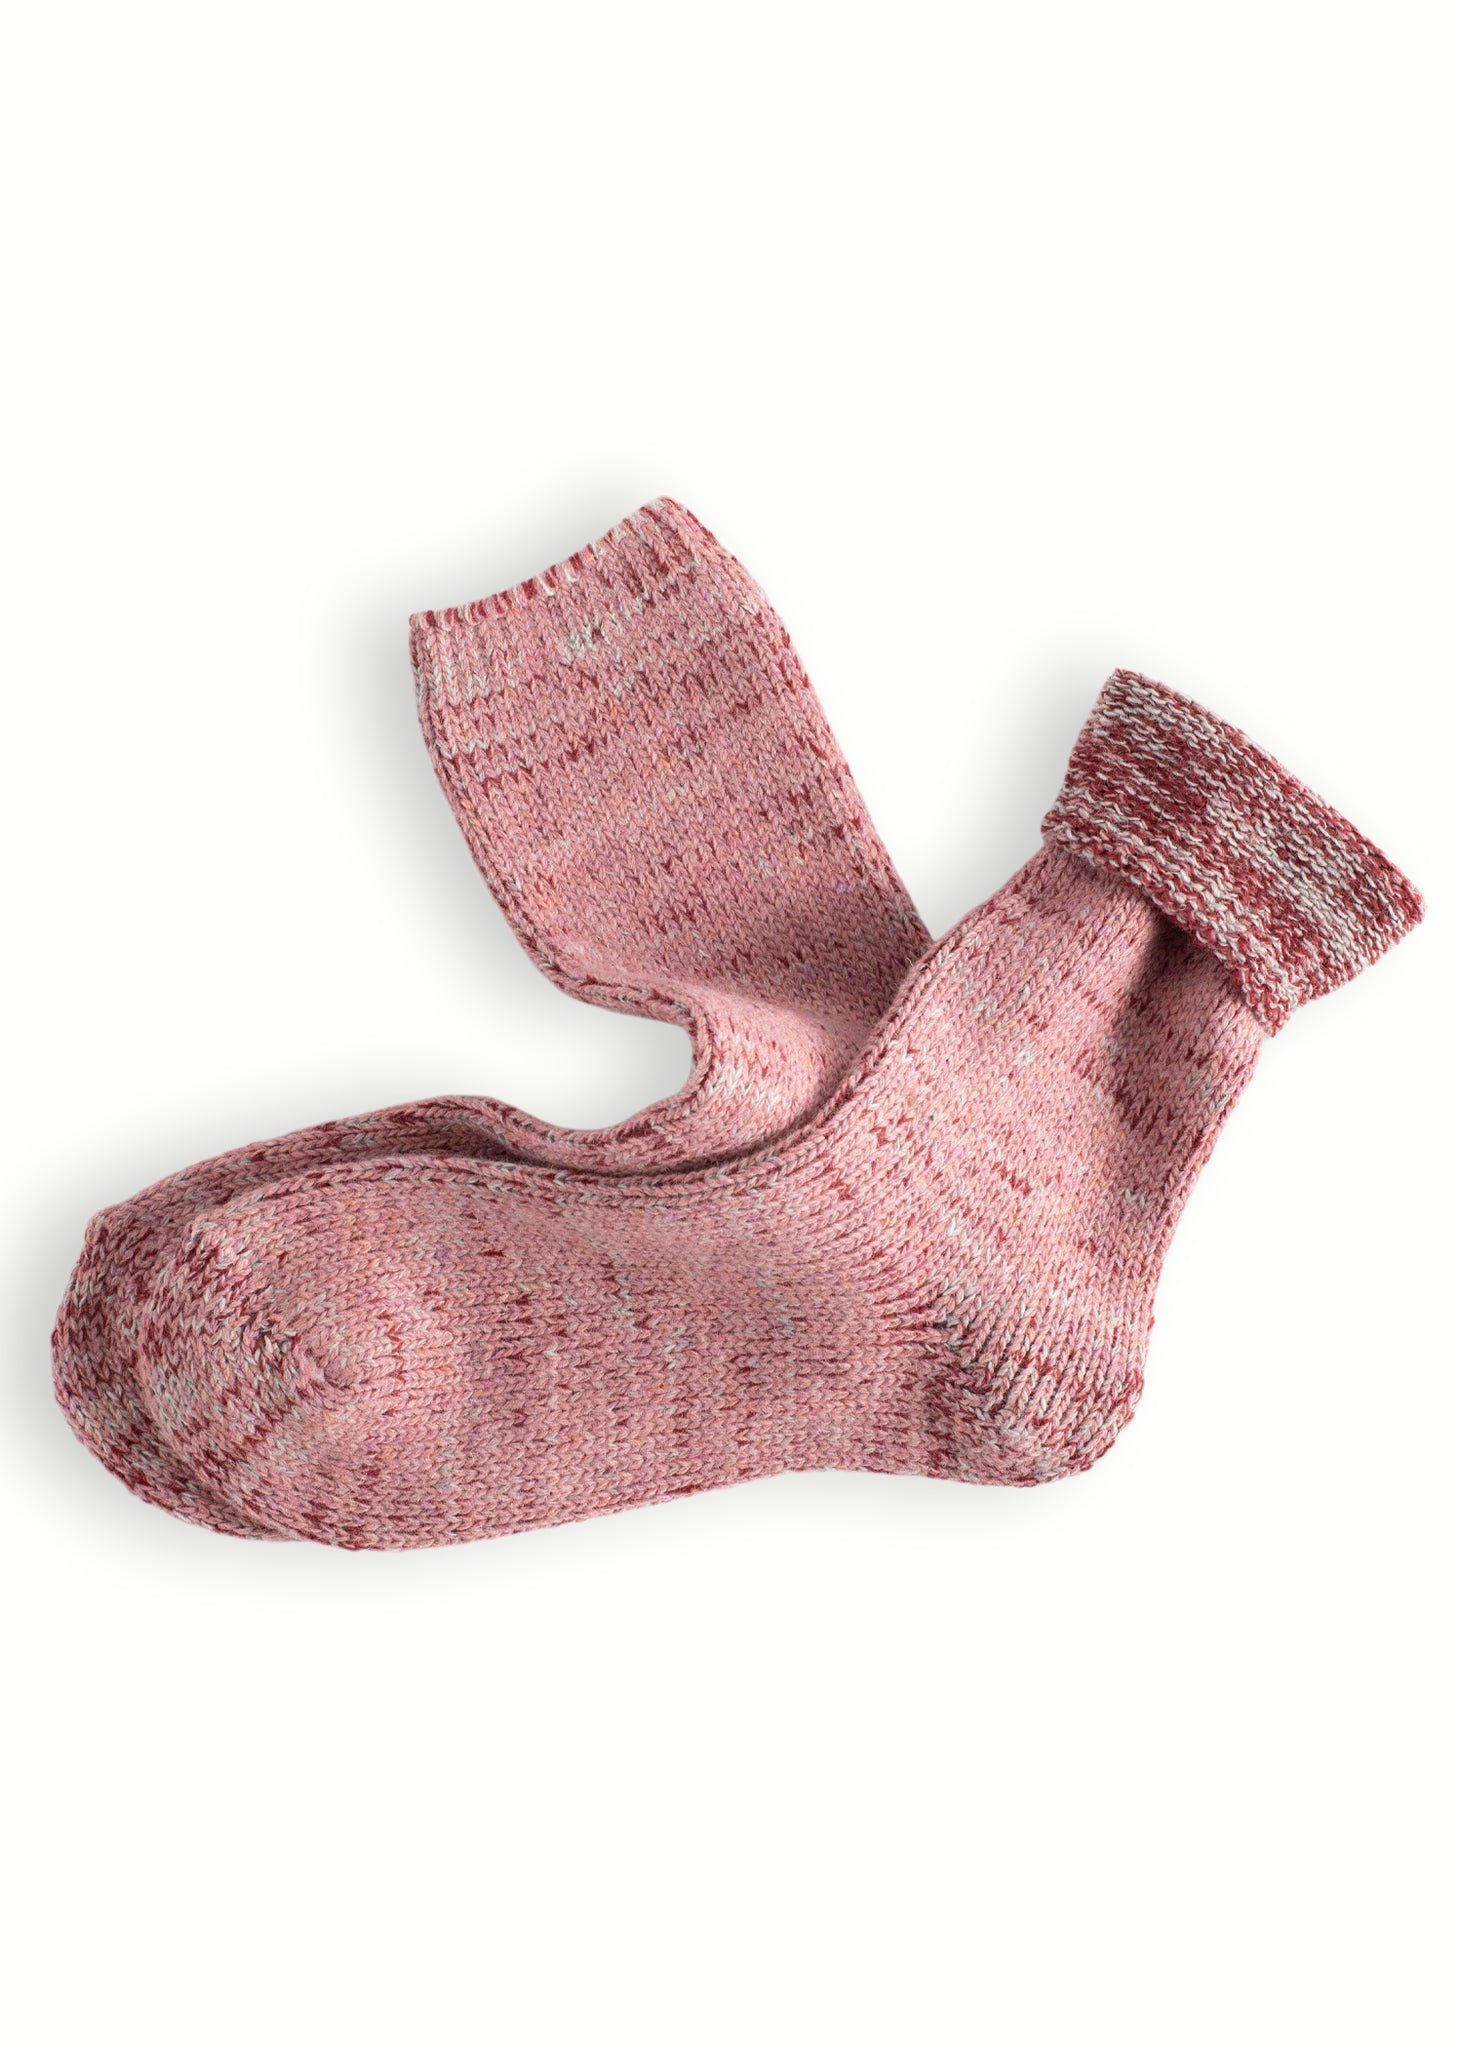 Thunders Love Wool Recycled Pale Pink Socks